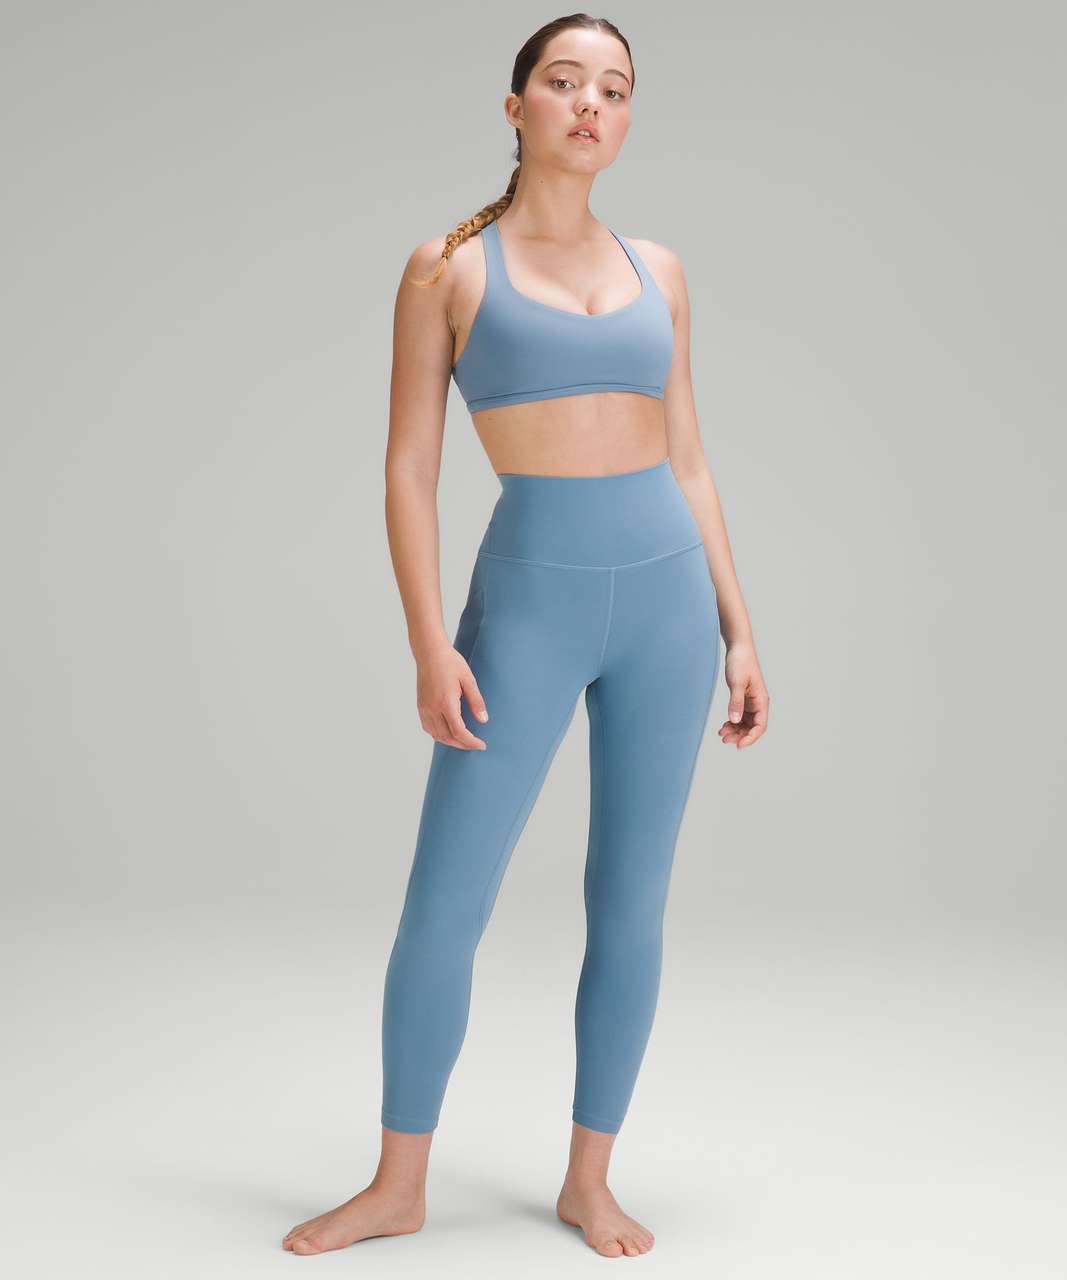 NWT Lululemon Align Crop HR Size 4 Water Drop Blue - Soft Nulu Yoga Pant  RARE !